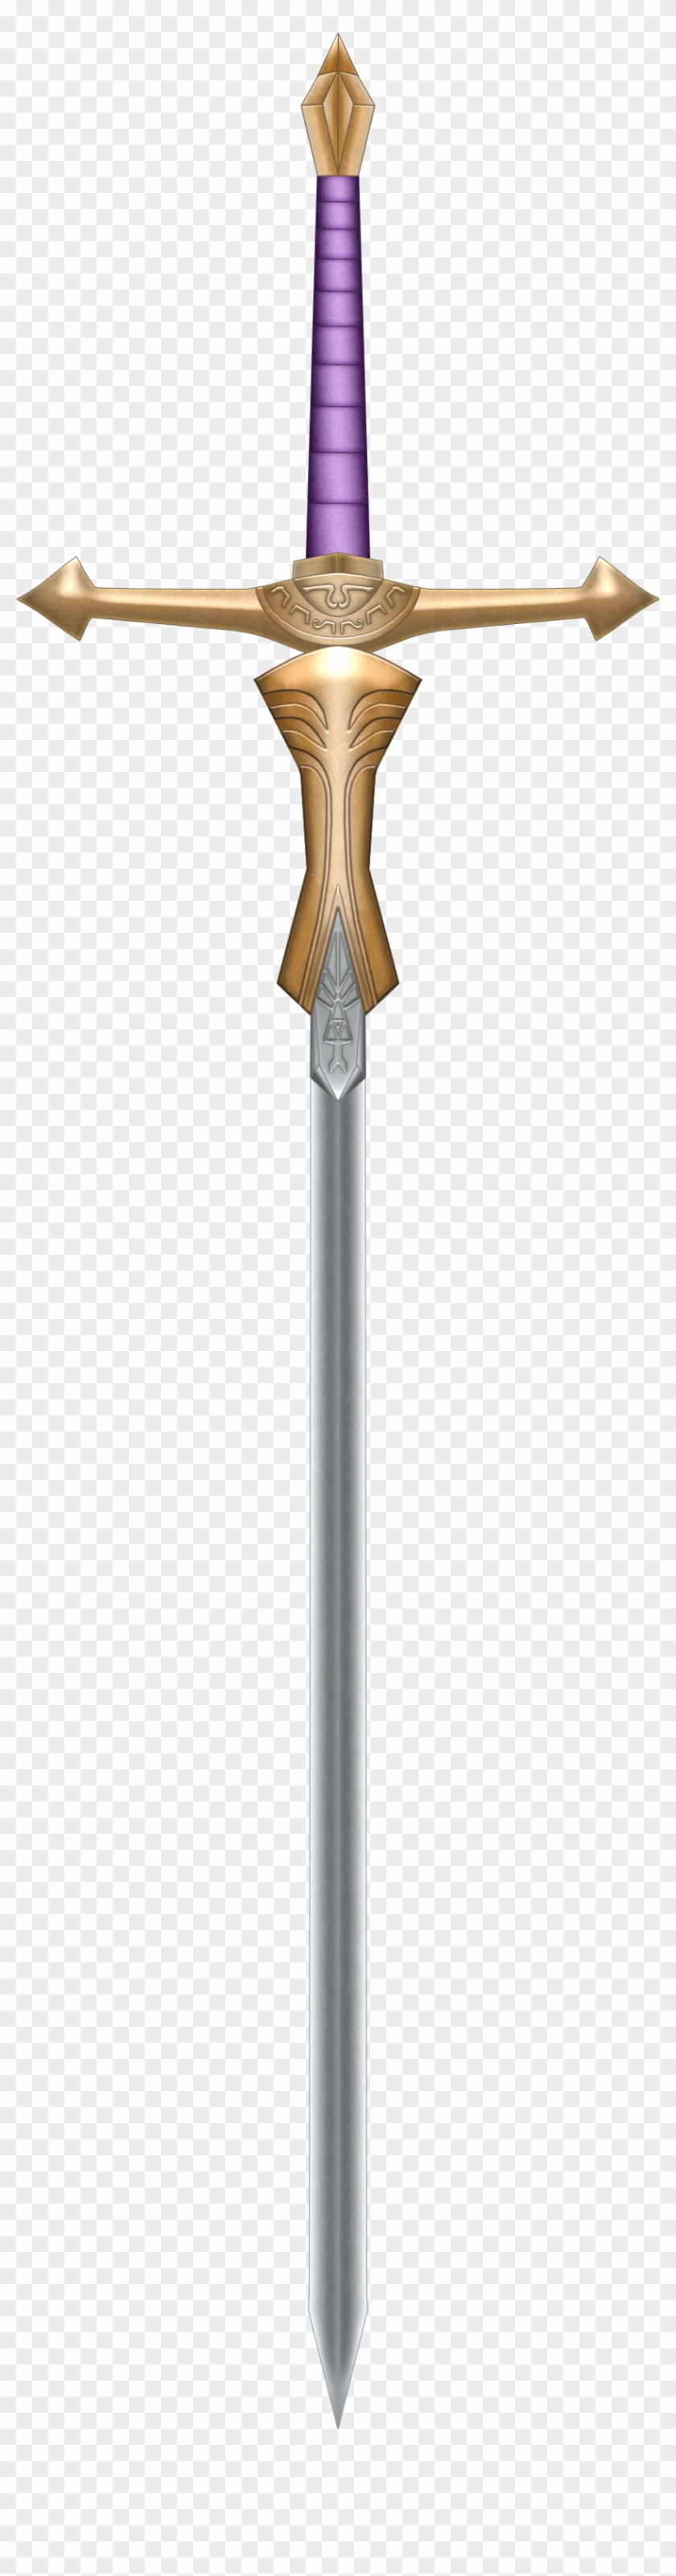 Tp Royal Sword By Blueamnesiac Tp Royal Sword By Blueamnesiac - Melee Weapon #1172264